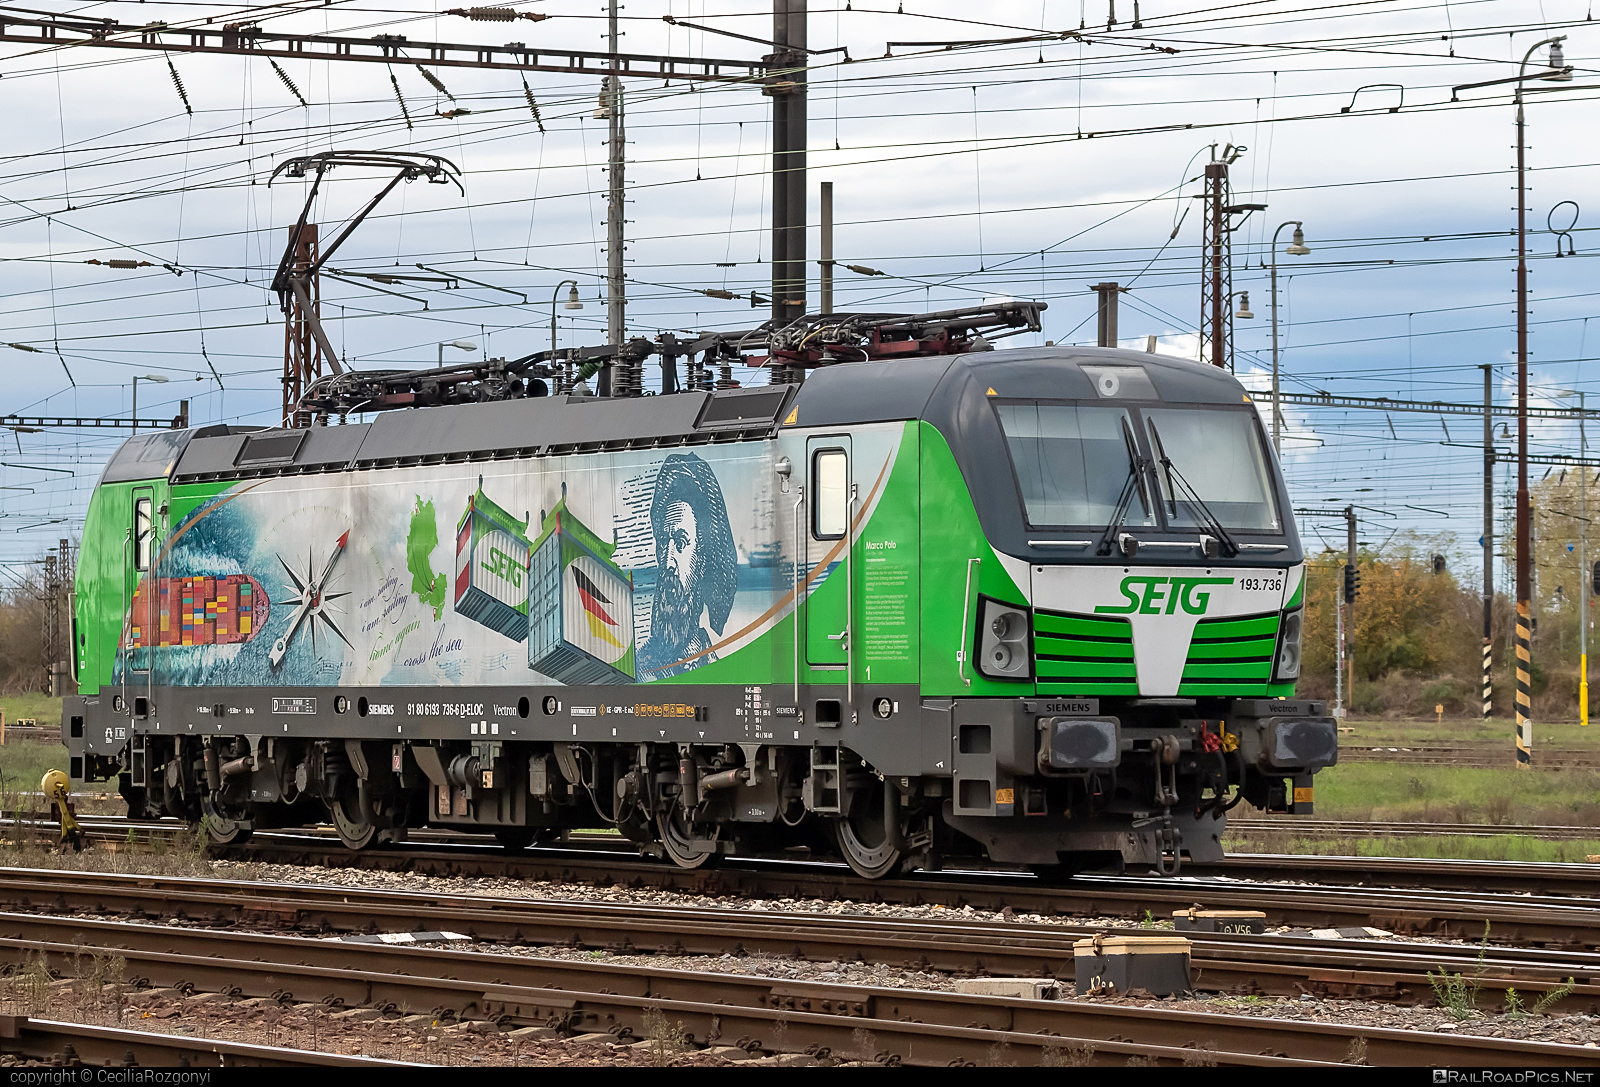 Siemens Vectron MS - 193 736 operated by Salzburger Eisenbahn Transportlogistik GmbH #SalzburgerEisenbahnTransportlogistik #SalzburgerEisenbahnTransportlogistikGmbH #ell #ellgermany #eloc #europeanlocomotiveleasing #setg #siemens #siemensVectron #siemensVectronMS #vectron #vectronMS